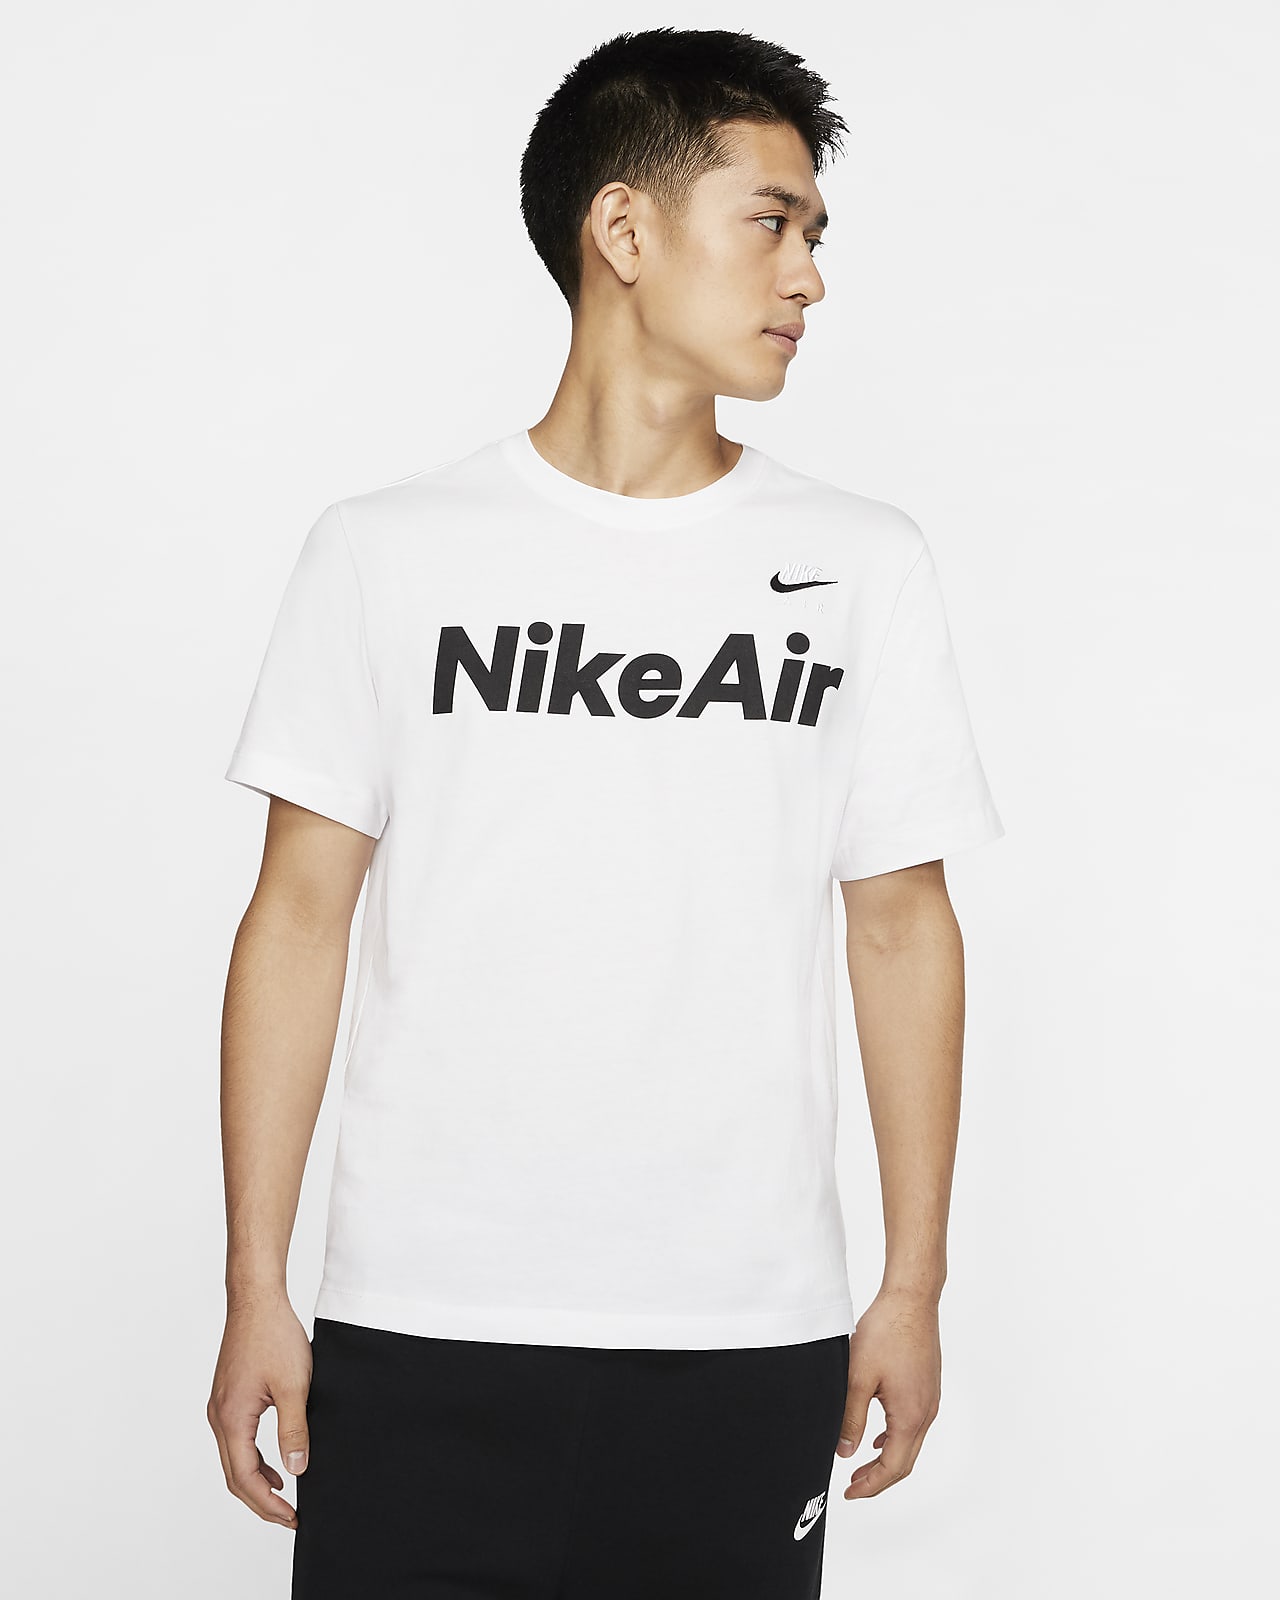 Nike Air Men's T-Shirt. Nike SG